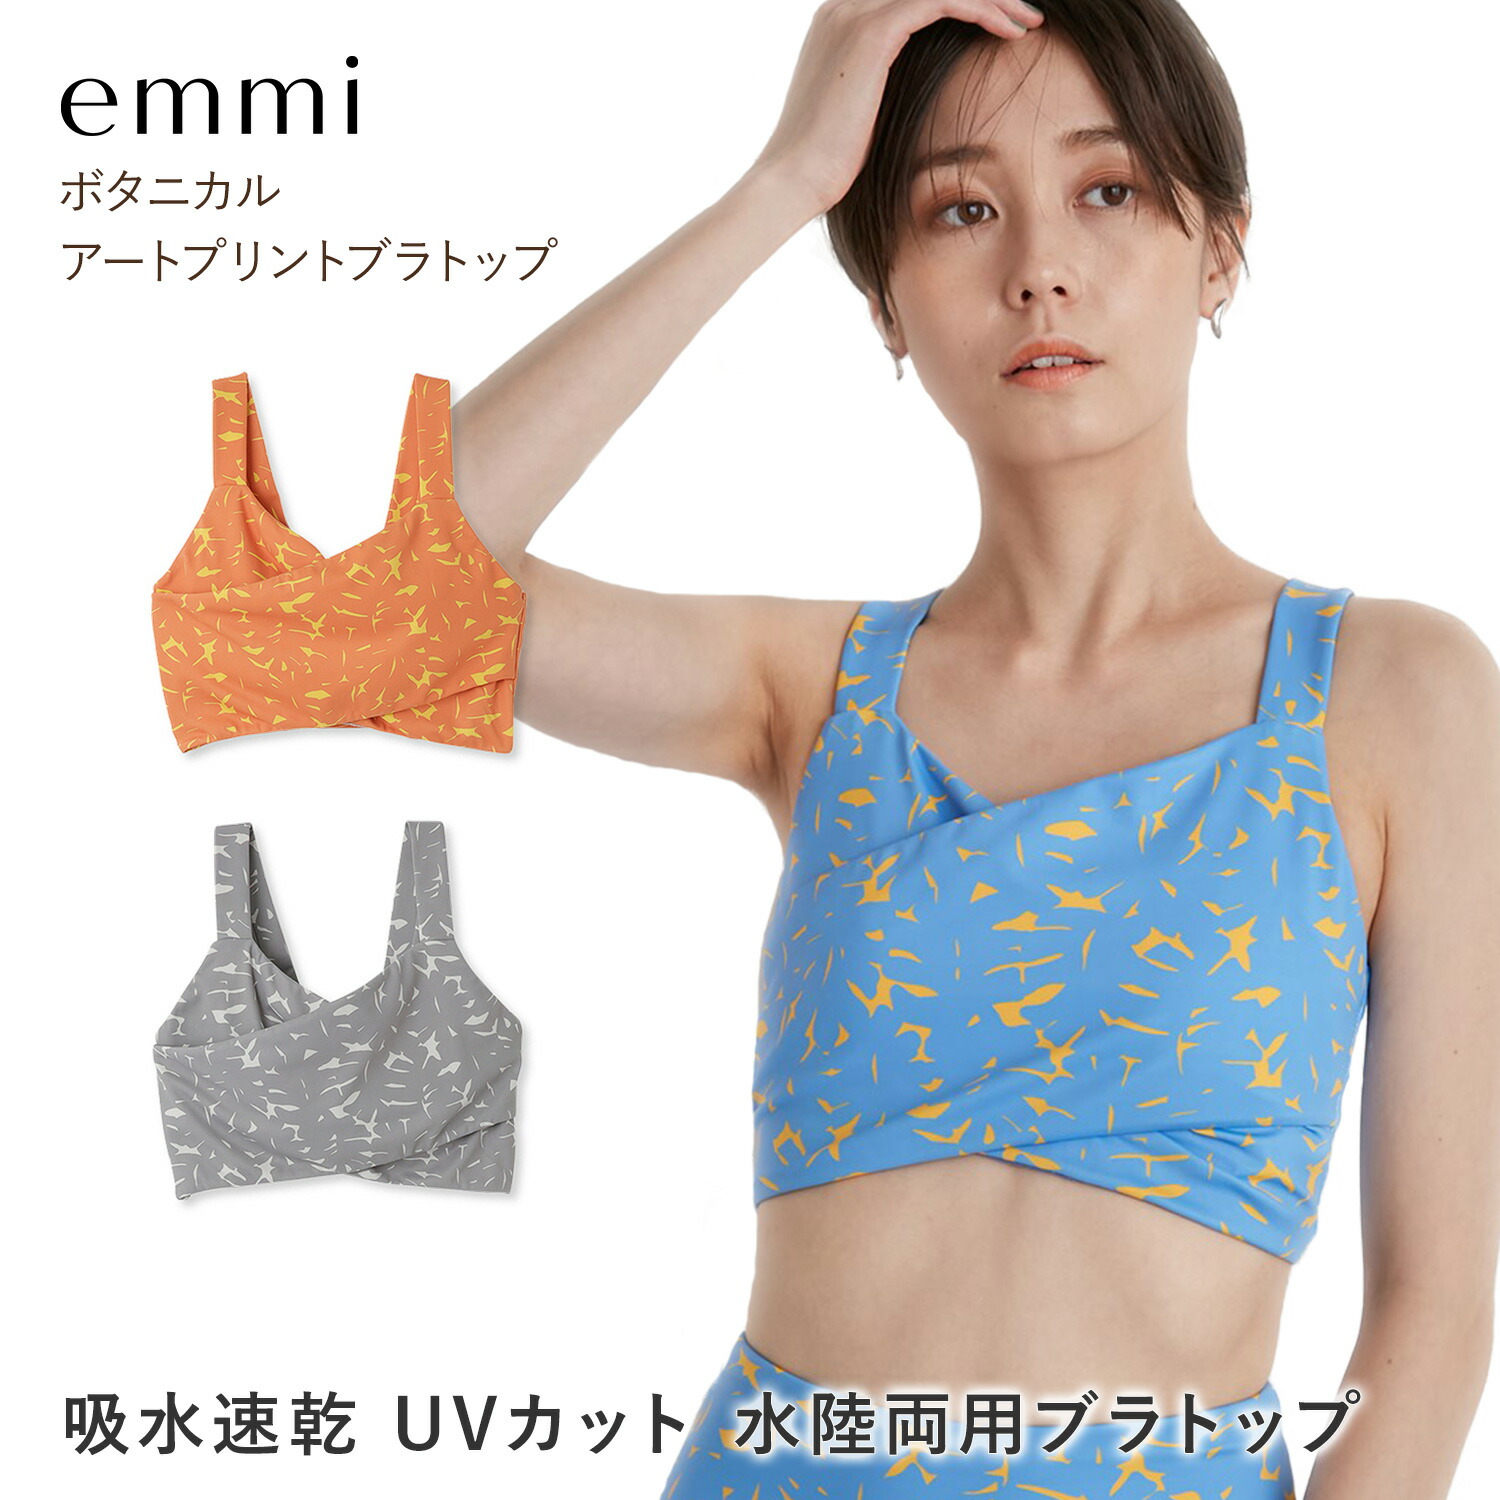 emmi] Botanical Art Print Bra Top Emi Women's Yoga Wear Yoga Tops